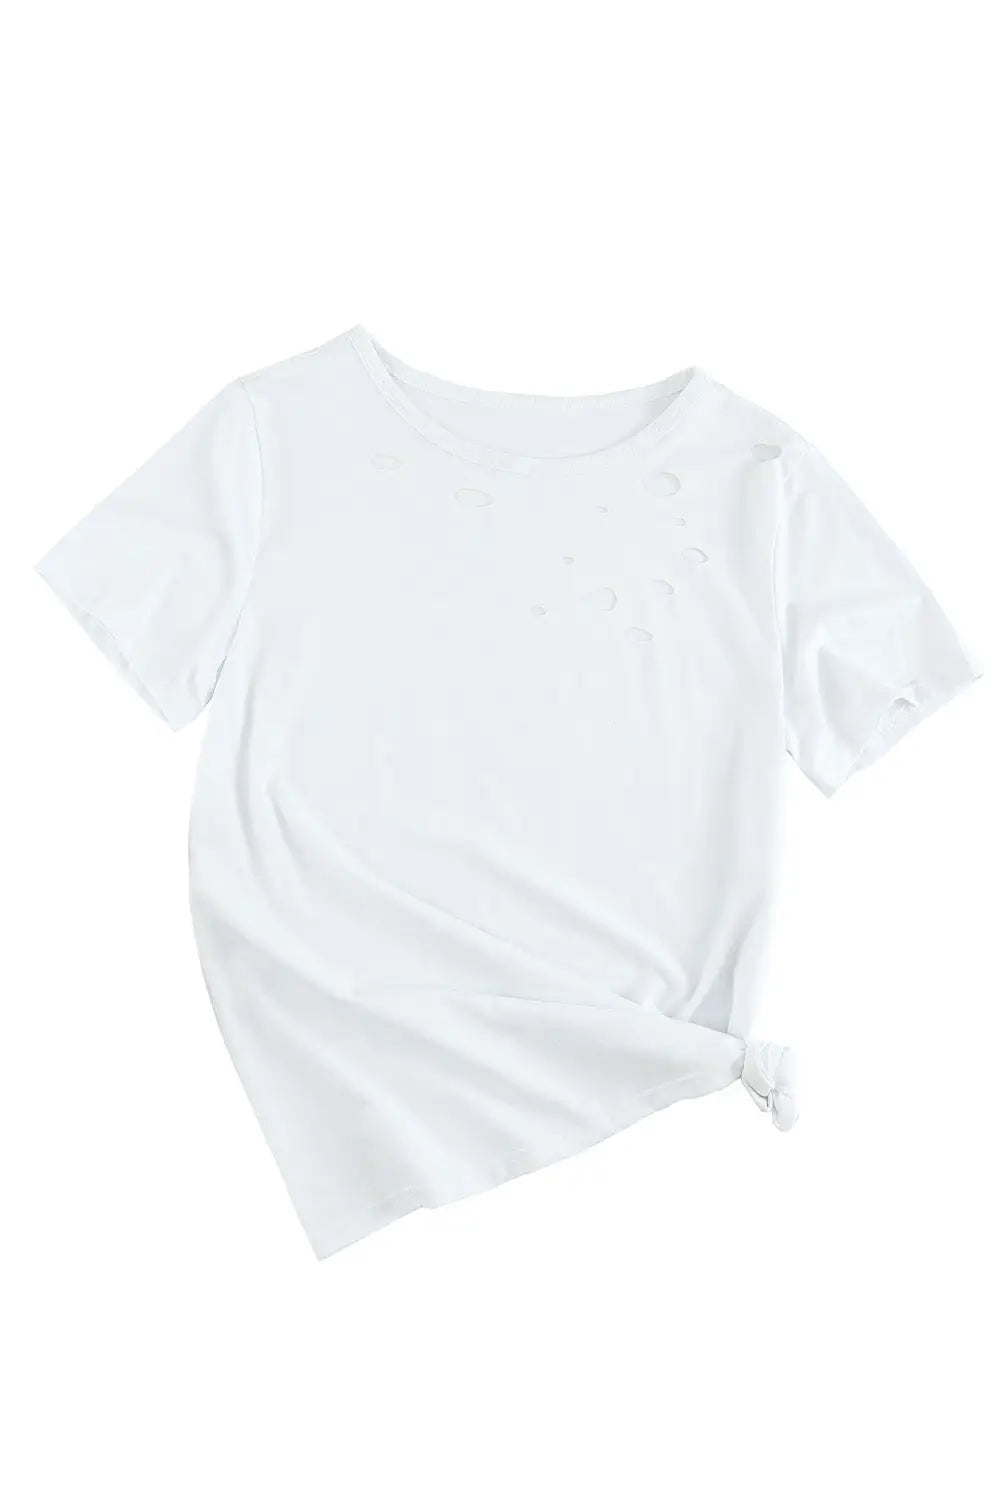 Black holes crew neck cotton mixed t-shirt - tops